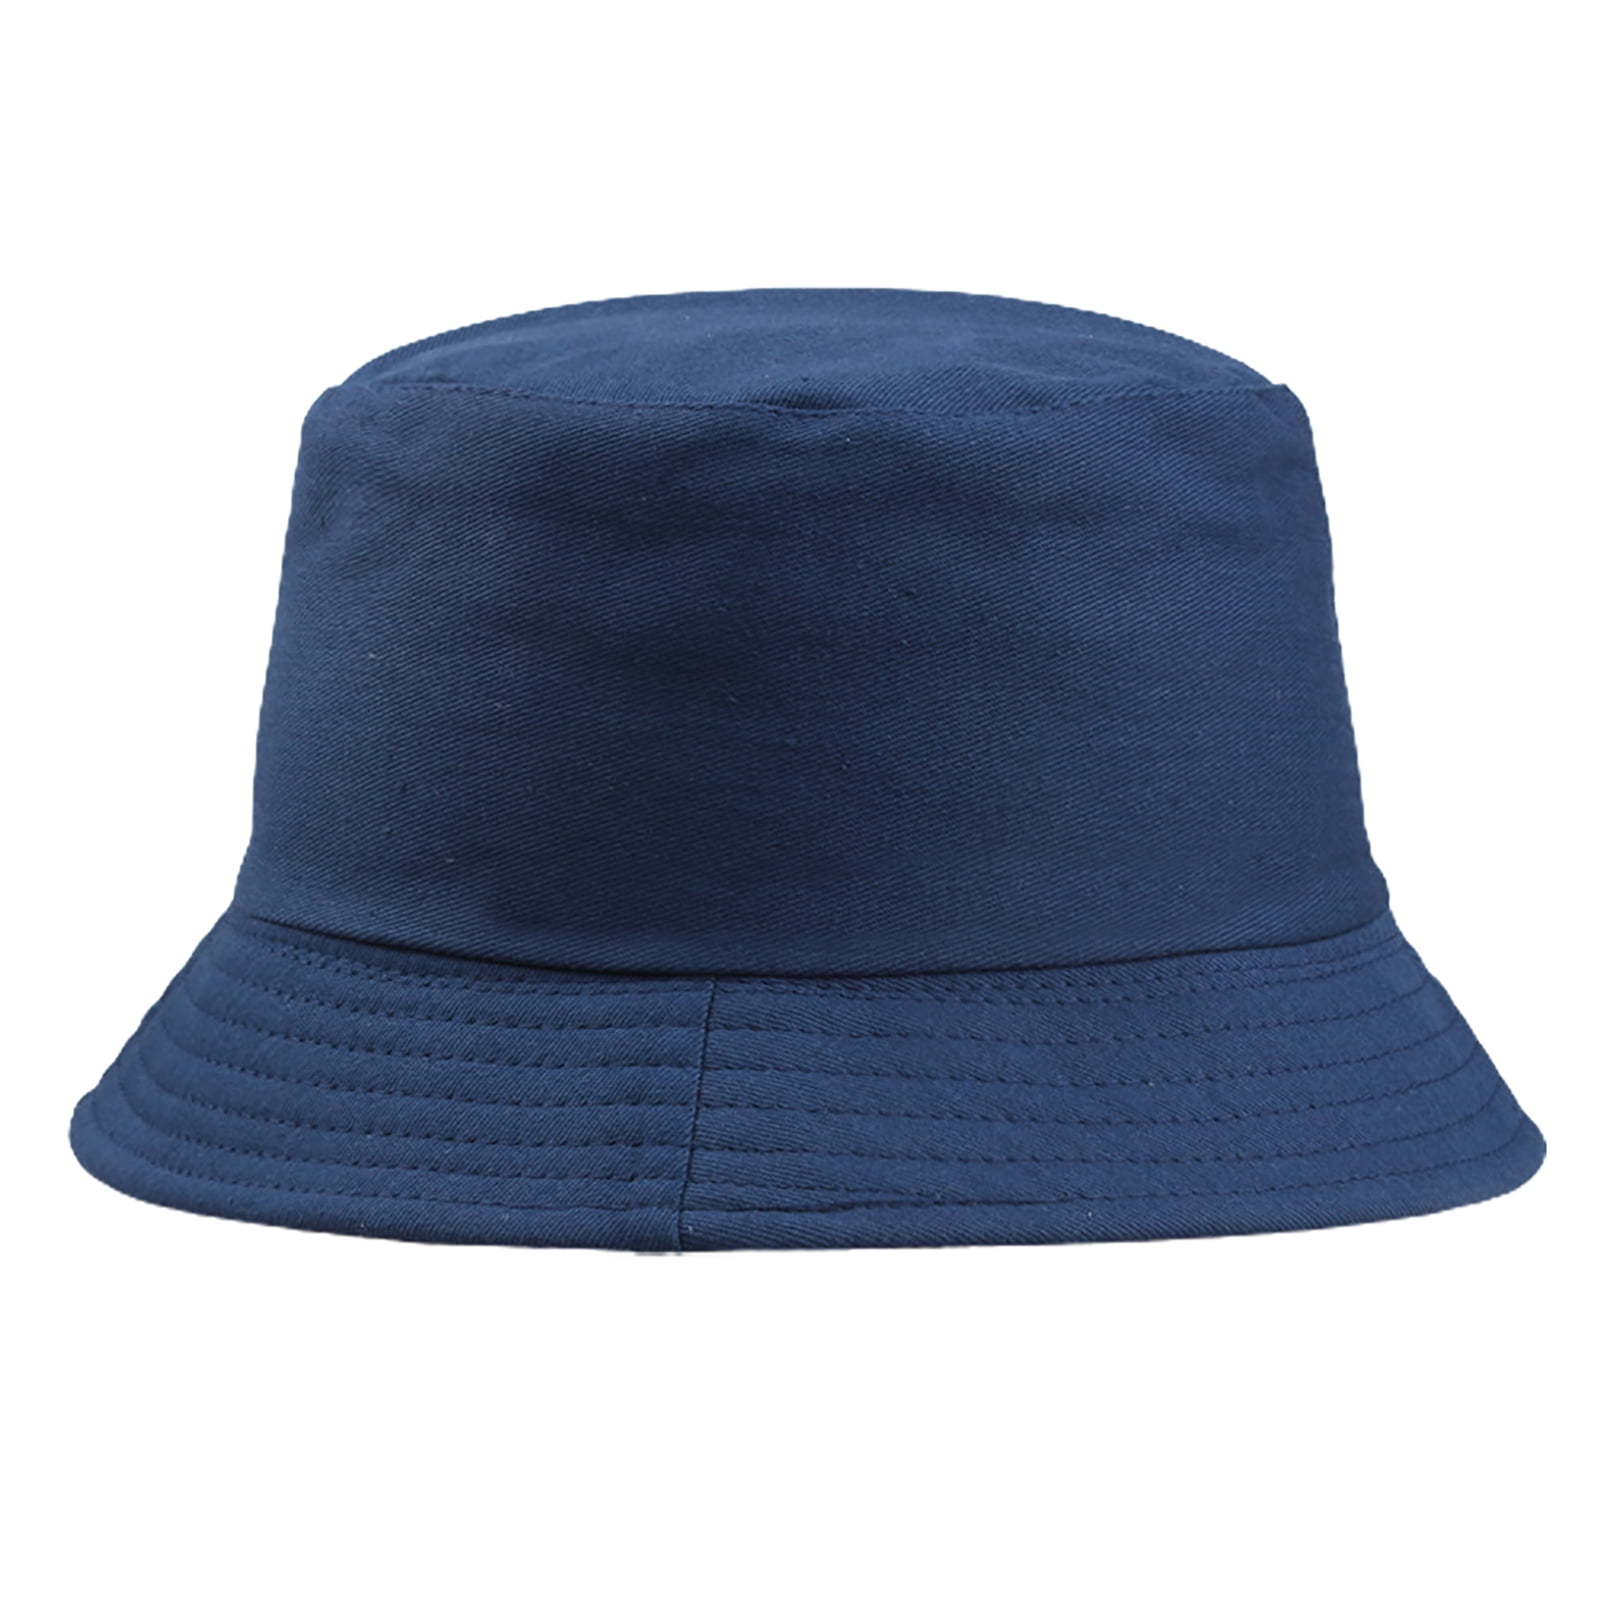 Sanwood Bucket Hat Navy Blue,Unisex Cotton Fisherman Hat Solid Color Beach Outdoor Sunshade Hip Hop Basin Cap, Adult Unisex, Size: One Size